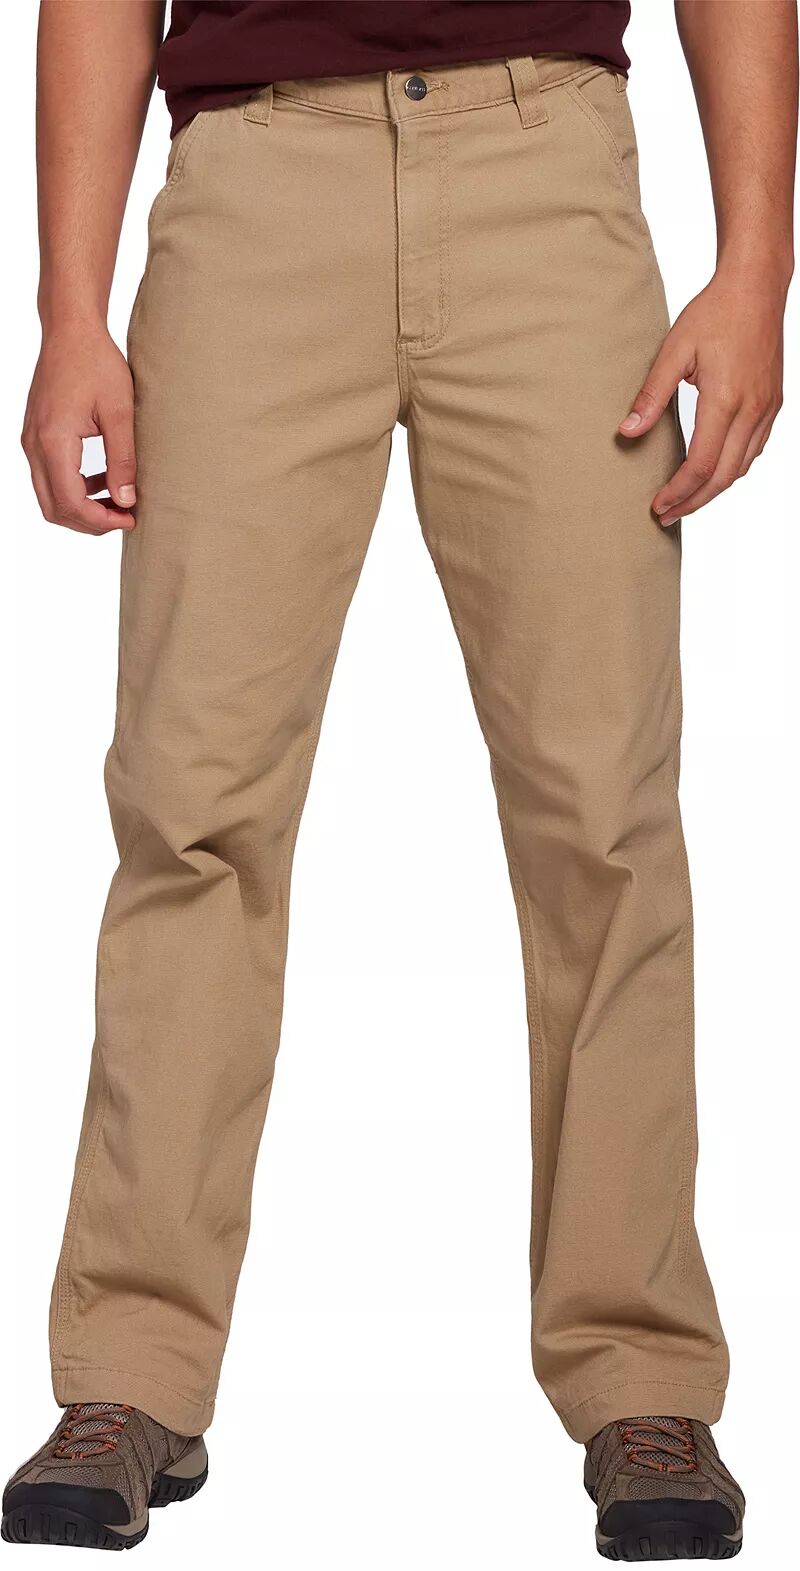 Мужские брюки-комбинезон Carhartt Rugged Flex Rigby цена и фото